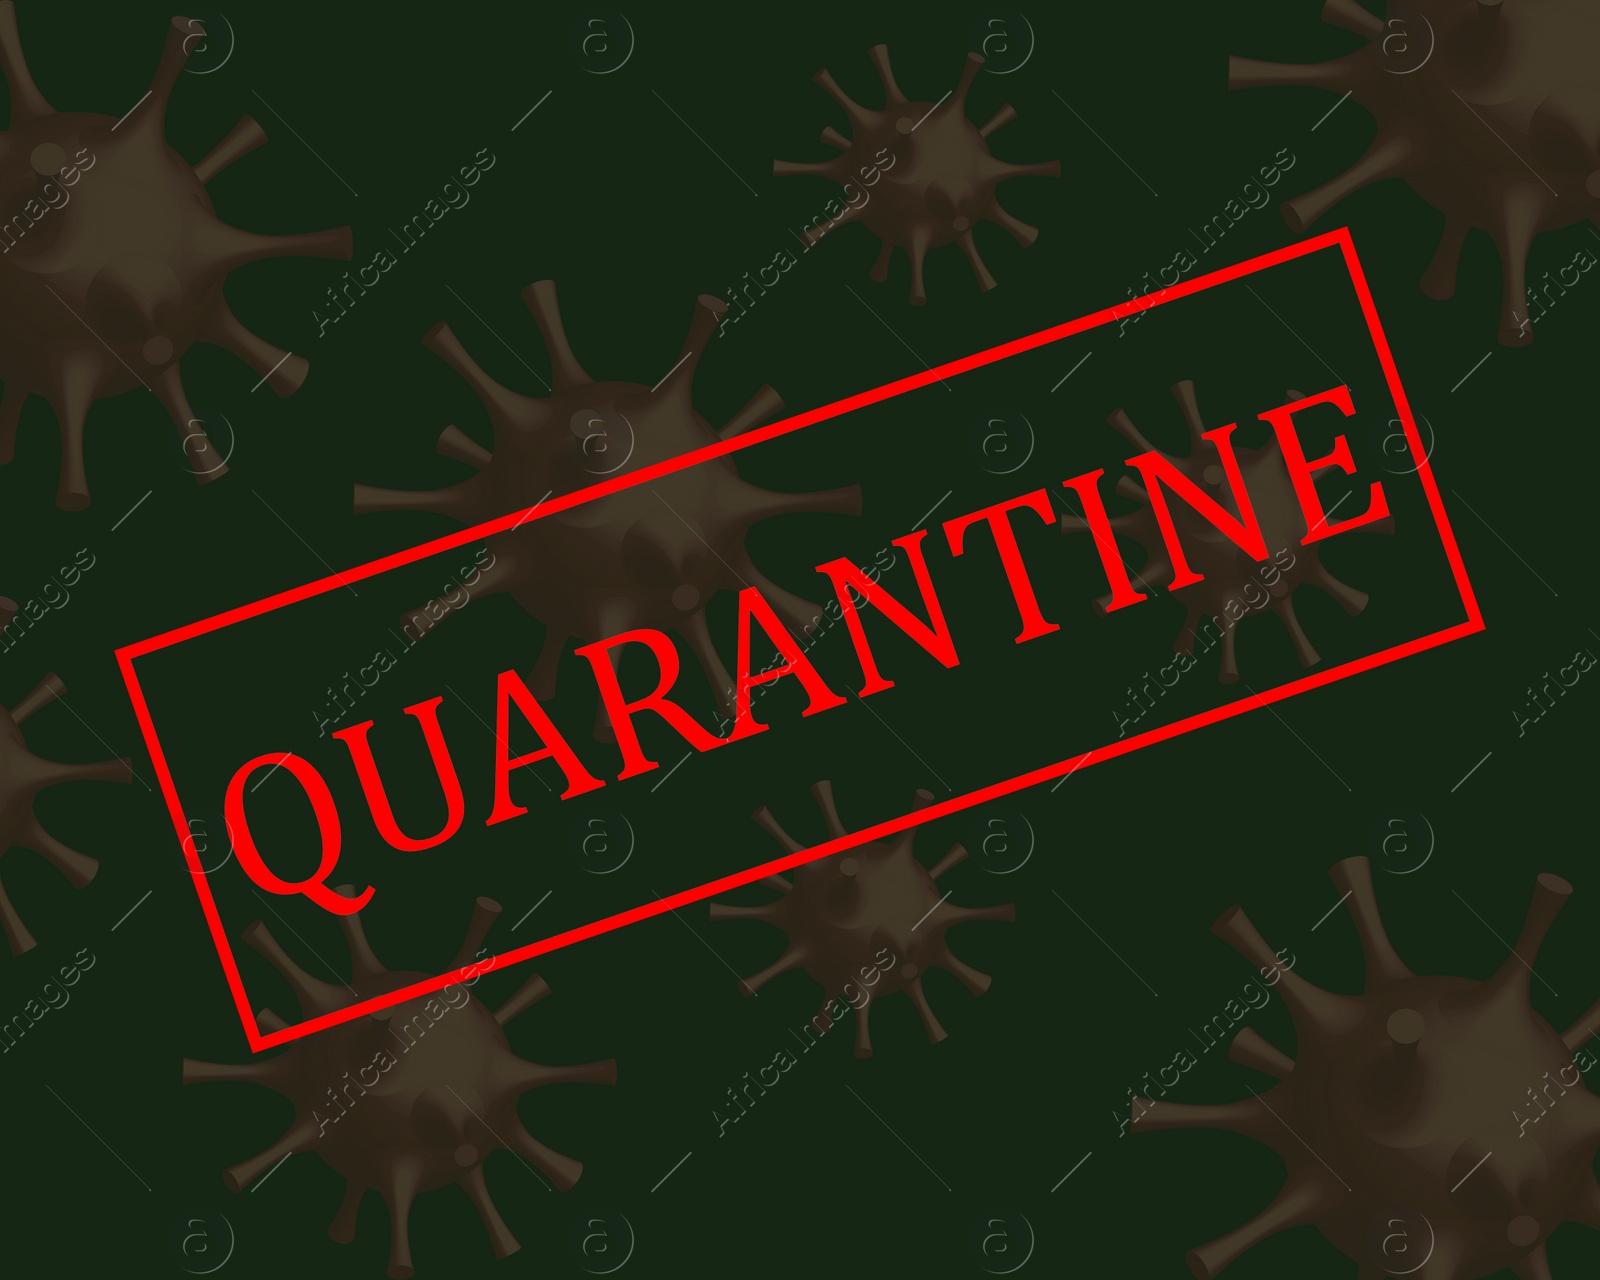 Image of Poster dedicated to quarantine during coronavirus outbreak